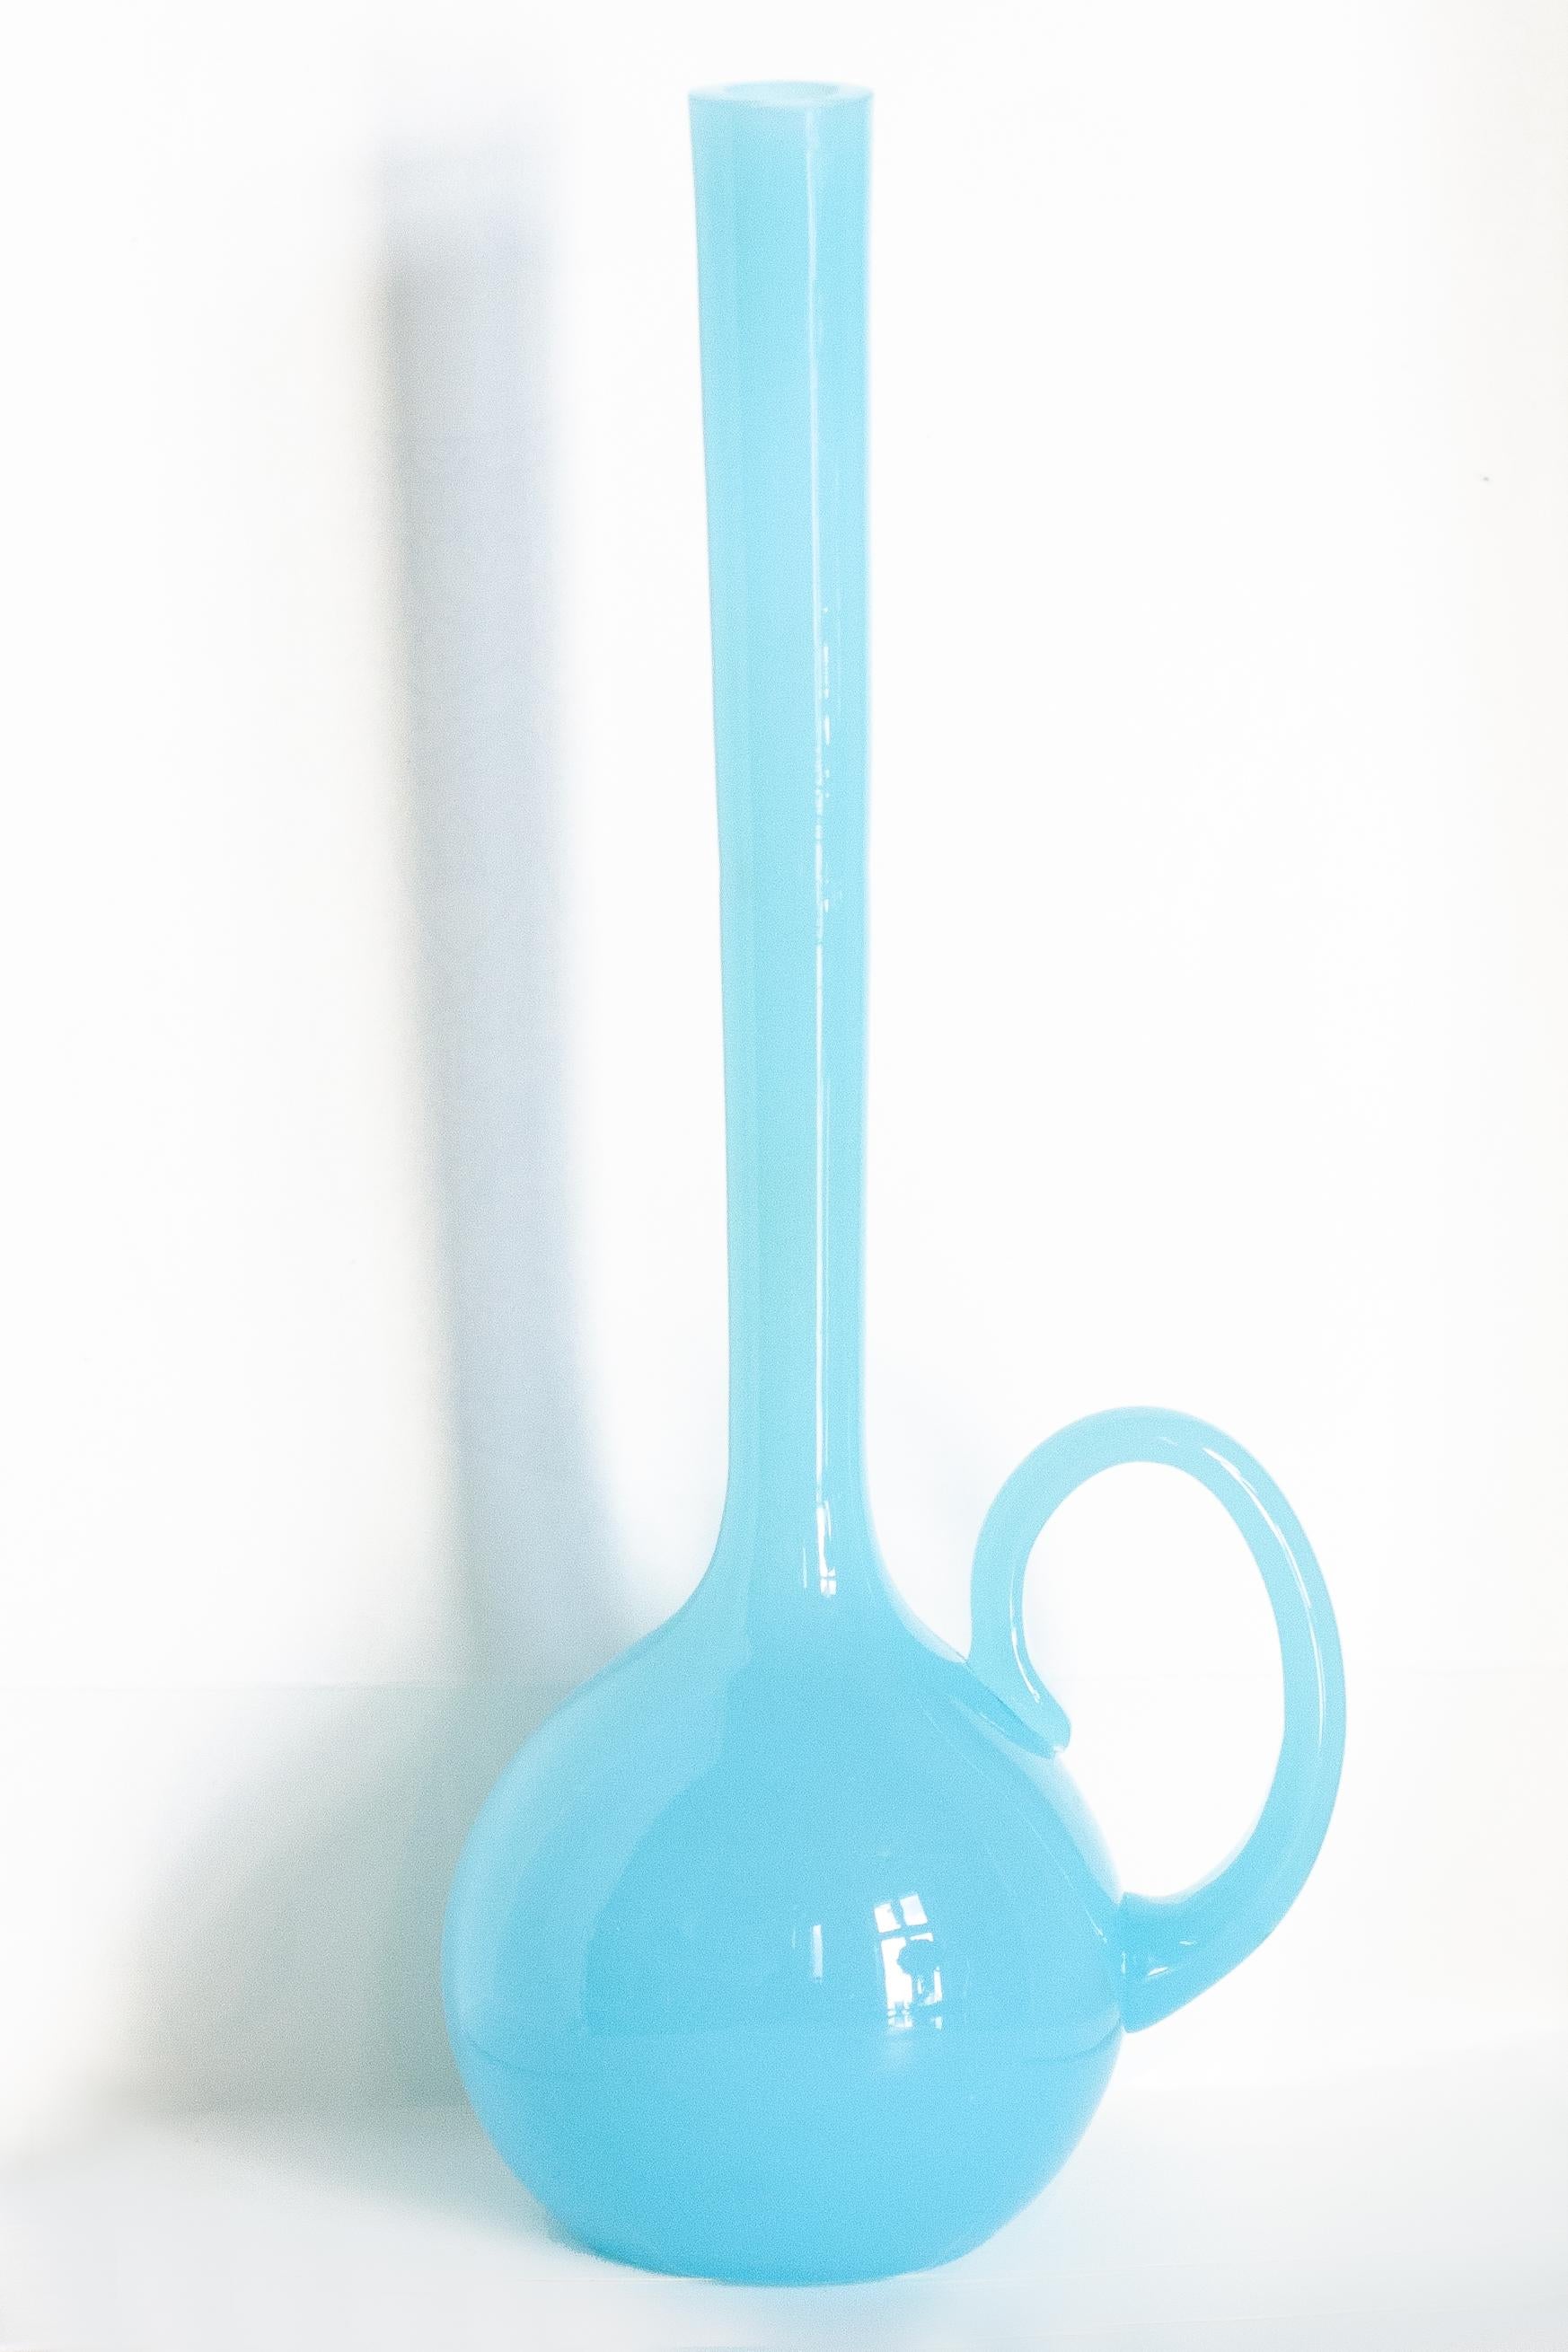 Mid Century Blue Decorative Glass Vase, Europe, 1960s For Sale 2